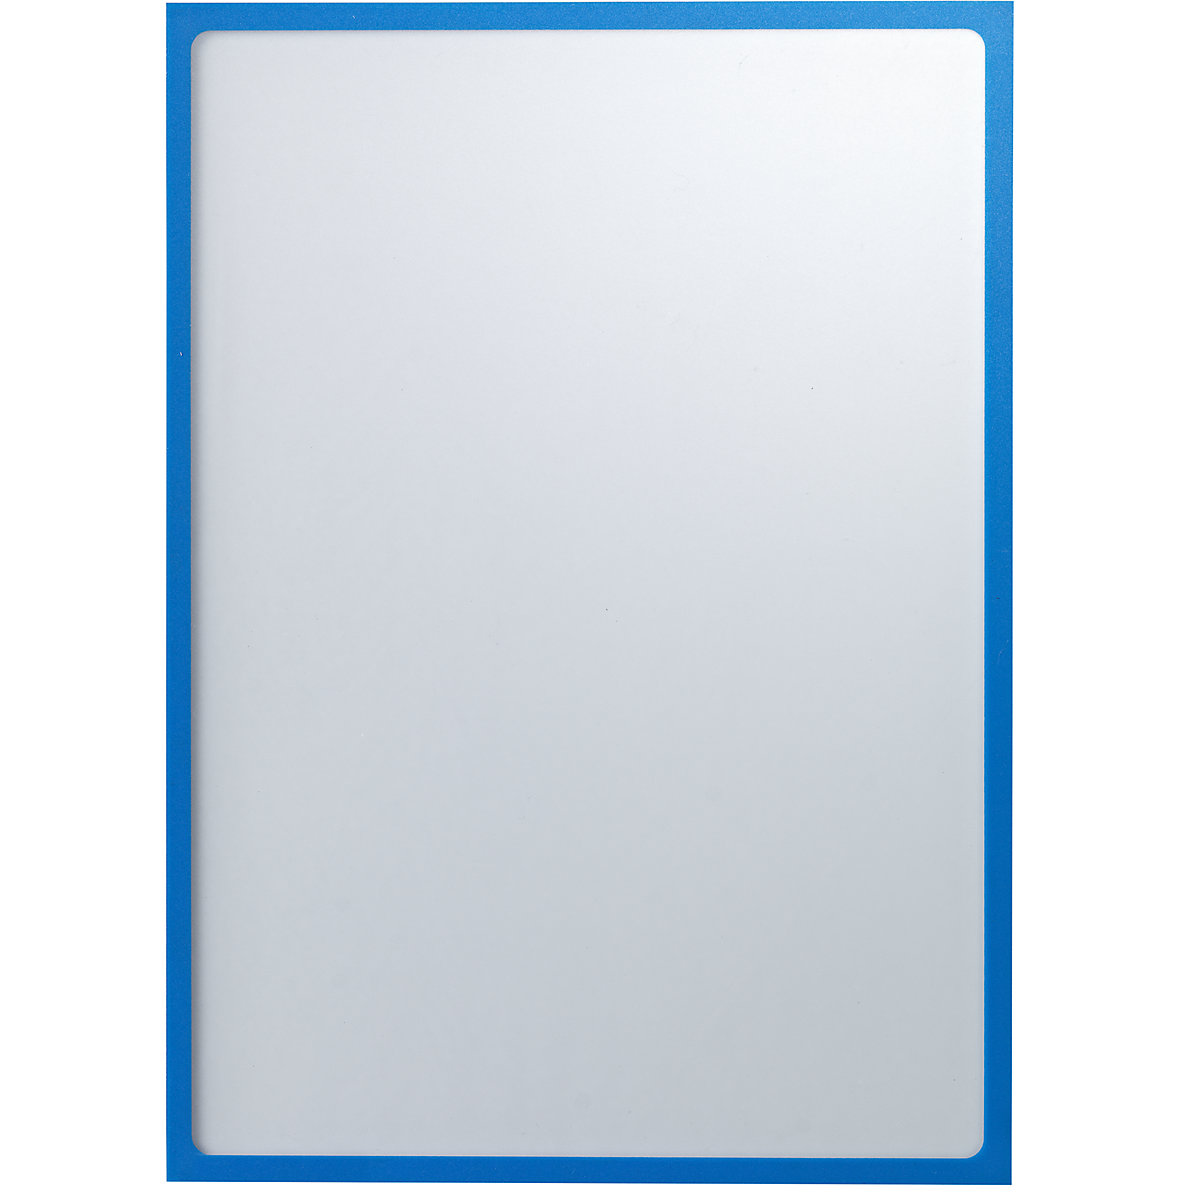 EUROKRAFTbasic – Pochette info magnétique, format A3, l x h 312 x 435 mm, cadre bleu, lot de 10